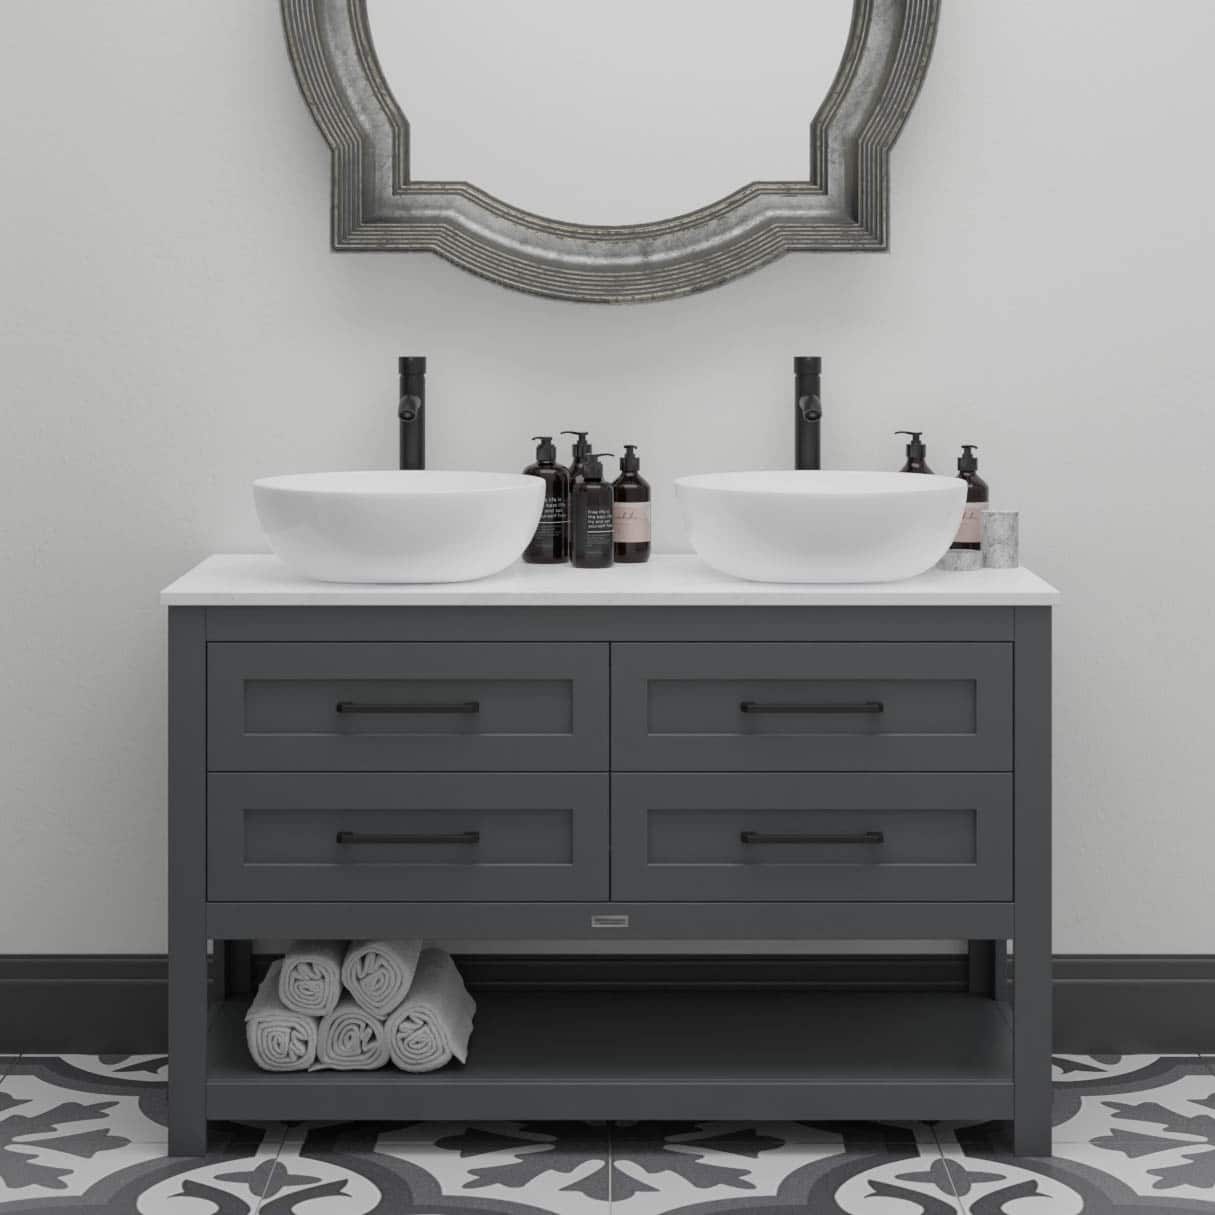 Hessle Bathroom Vanity Unit